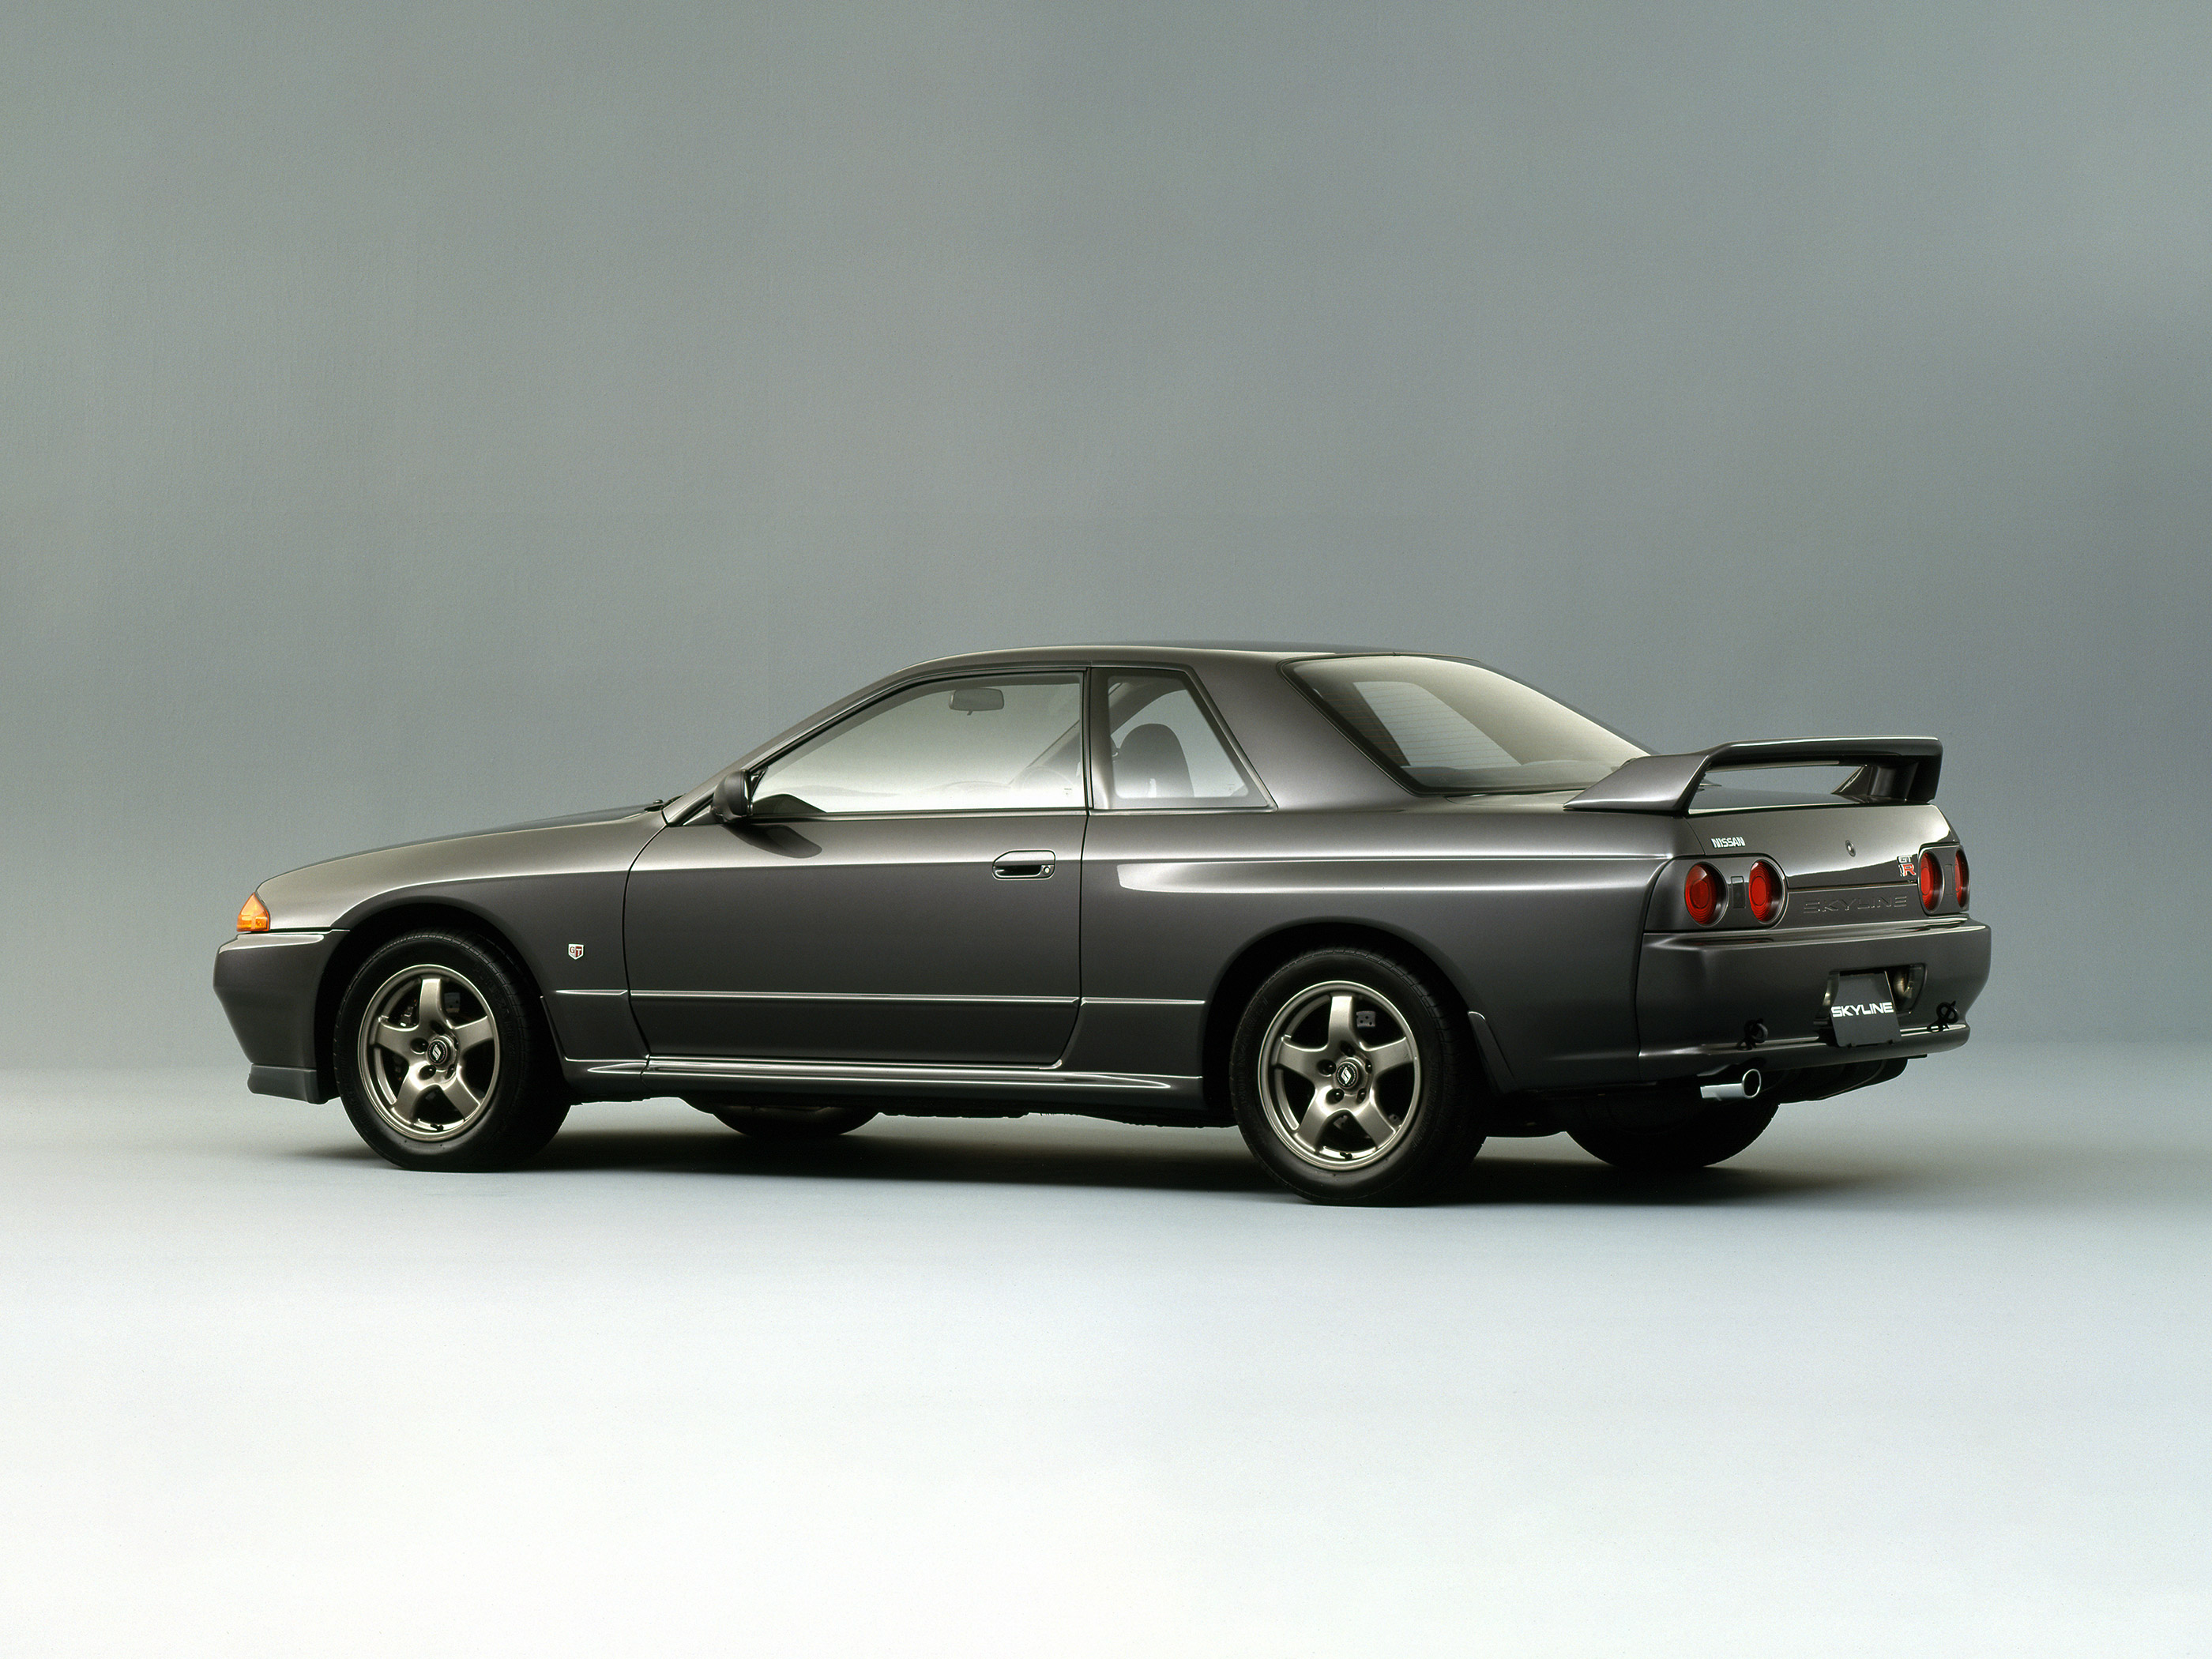  1989 Nissan Skyline GT-R Wallpaper.